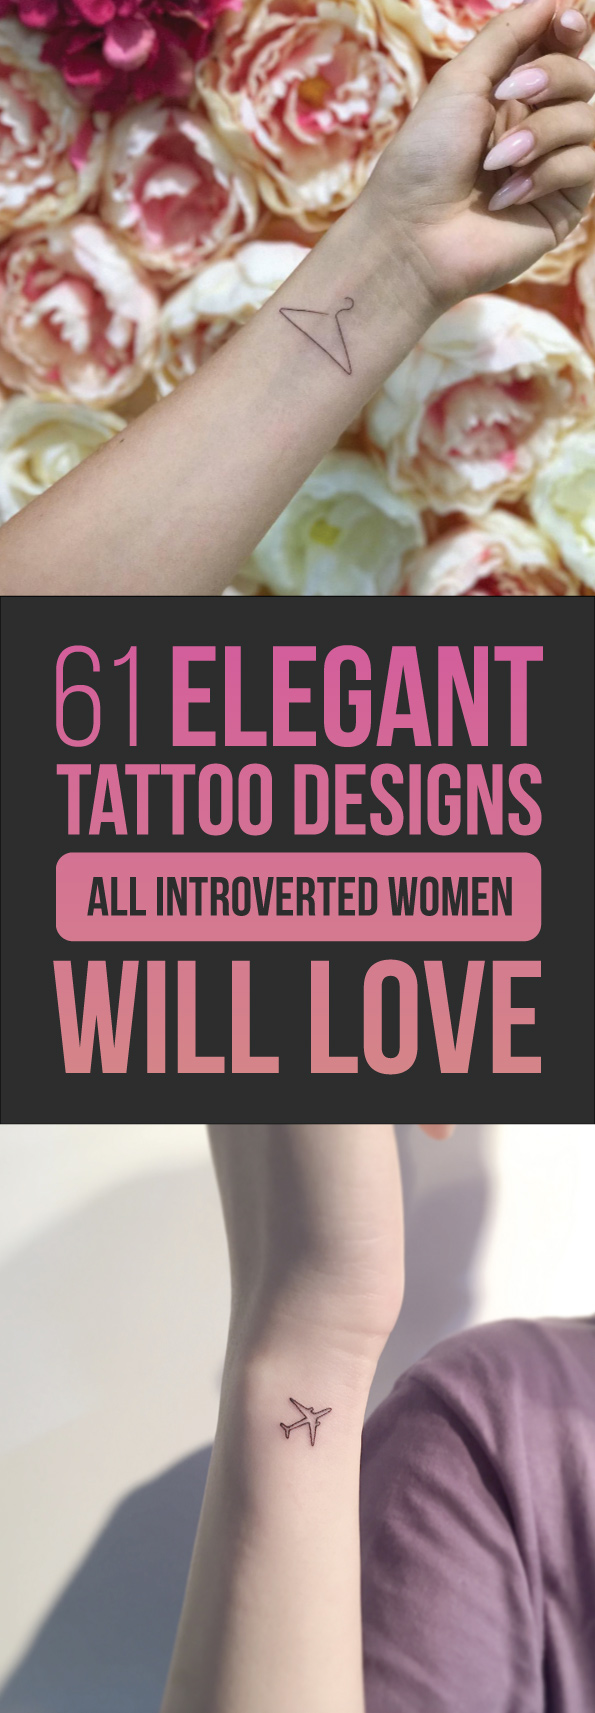 61 Elegant Tattoo Designs All Introverted Women Will Love